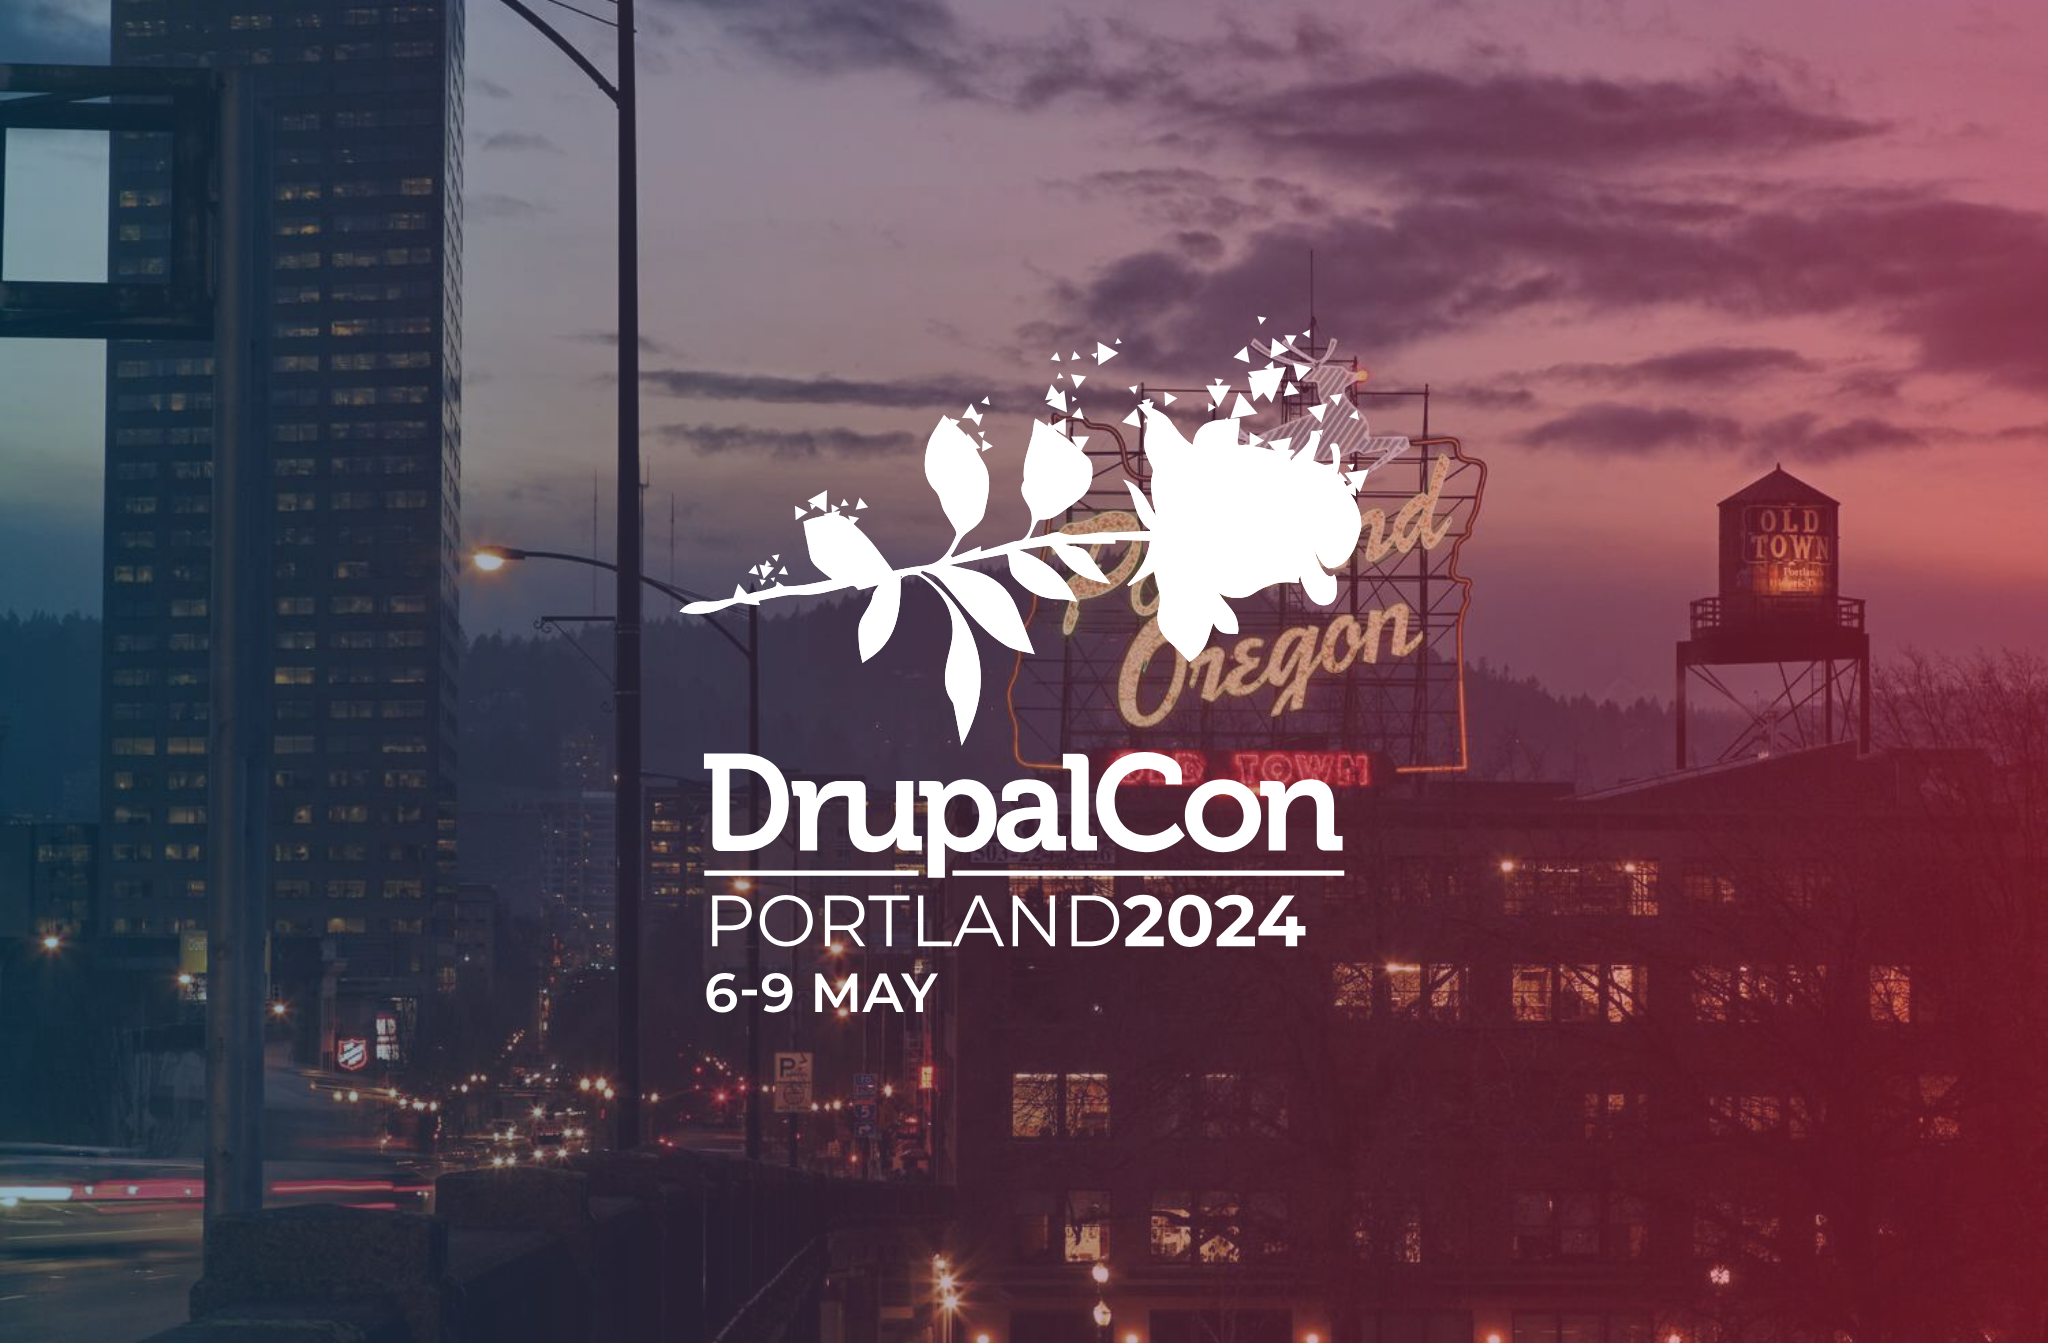 DrupalCon Portland logo over a skyline of Portland